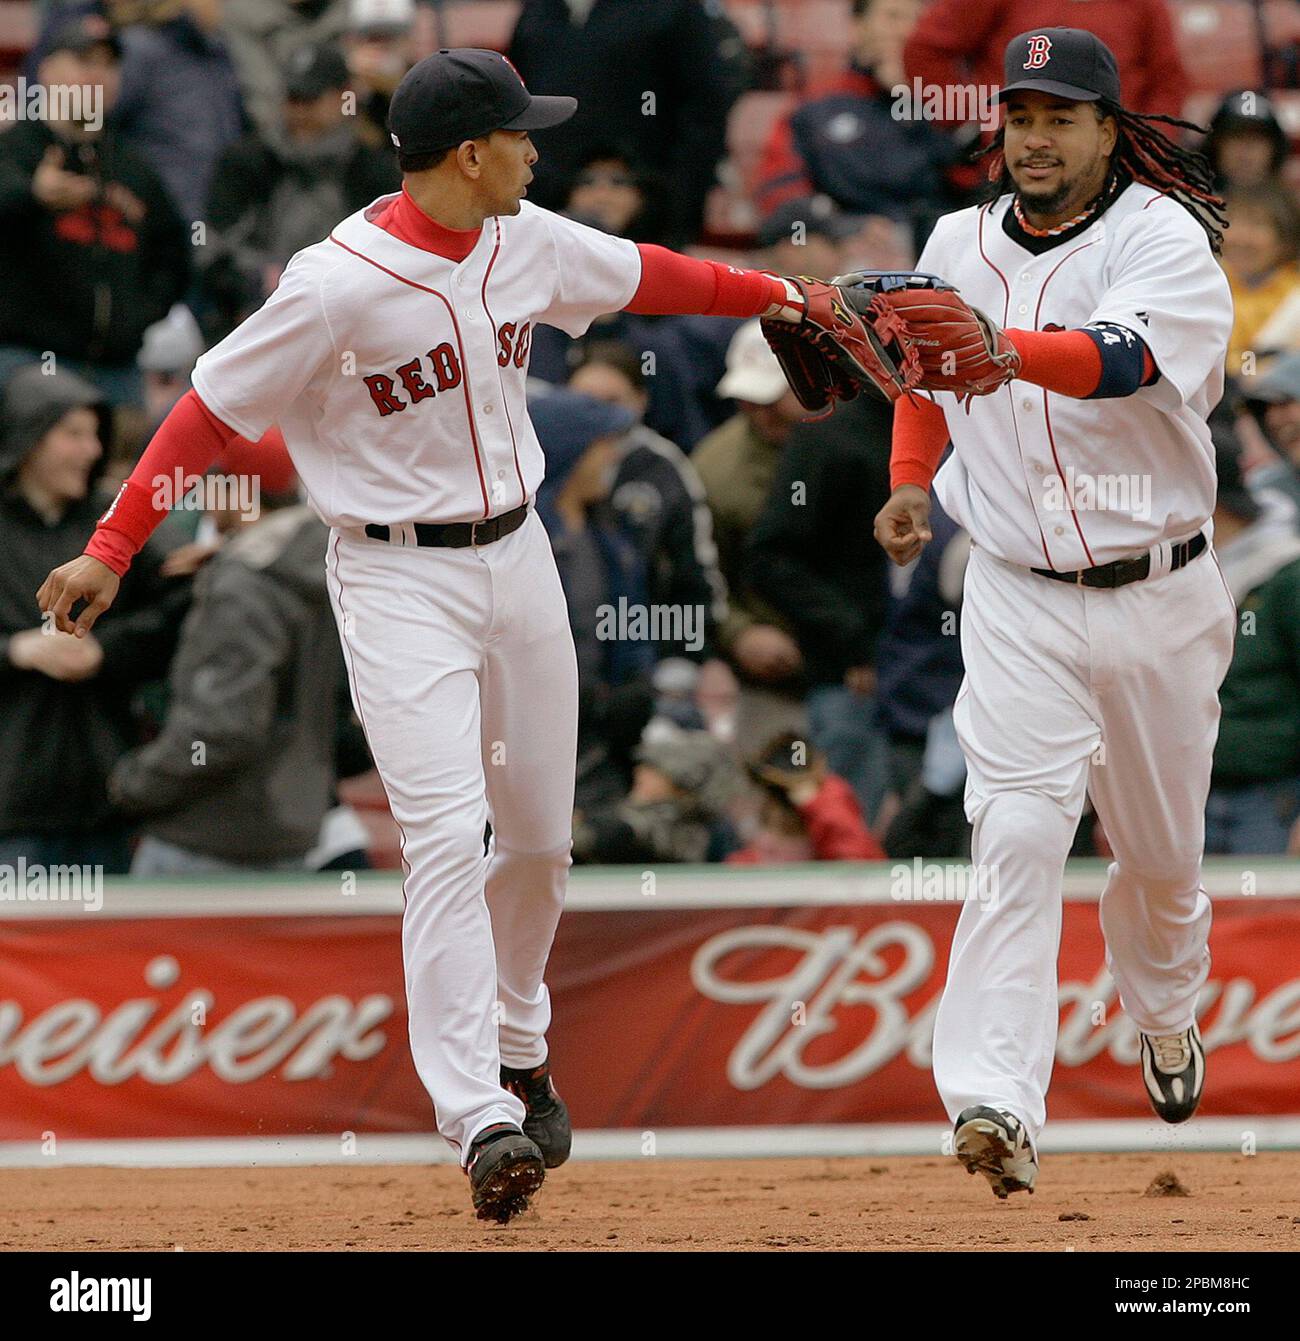 Boston Red Sox left fielder Manny Ramirez, right, and shortstop